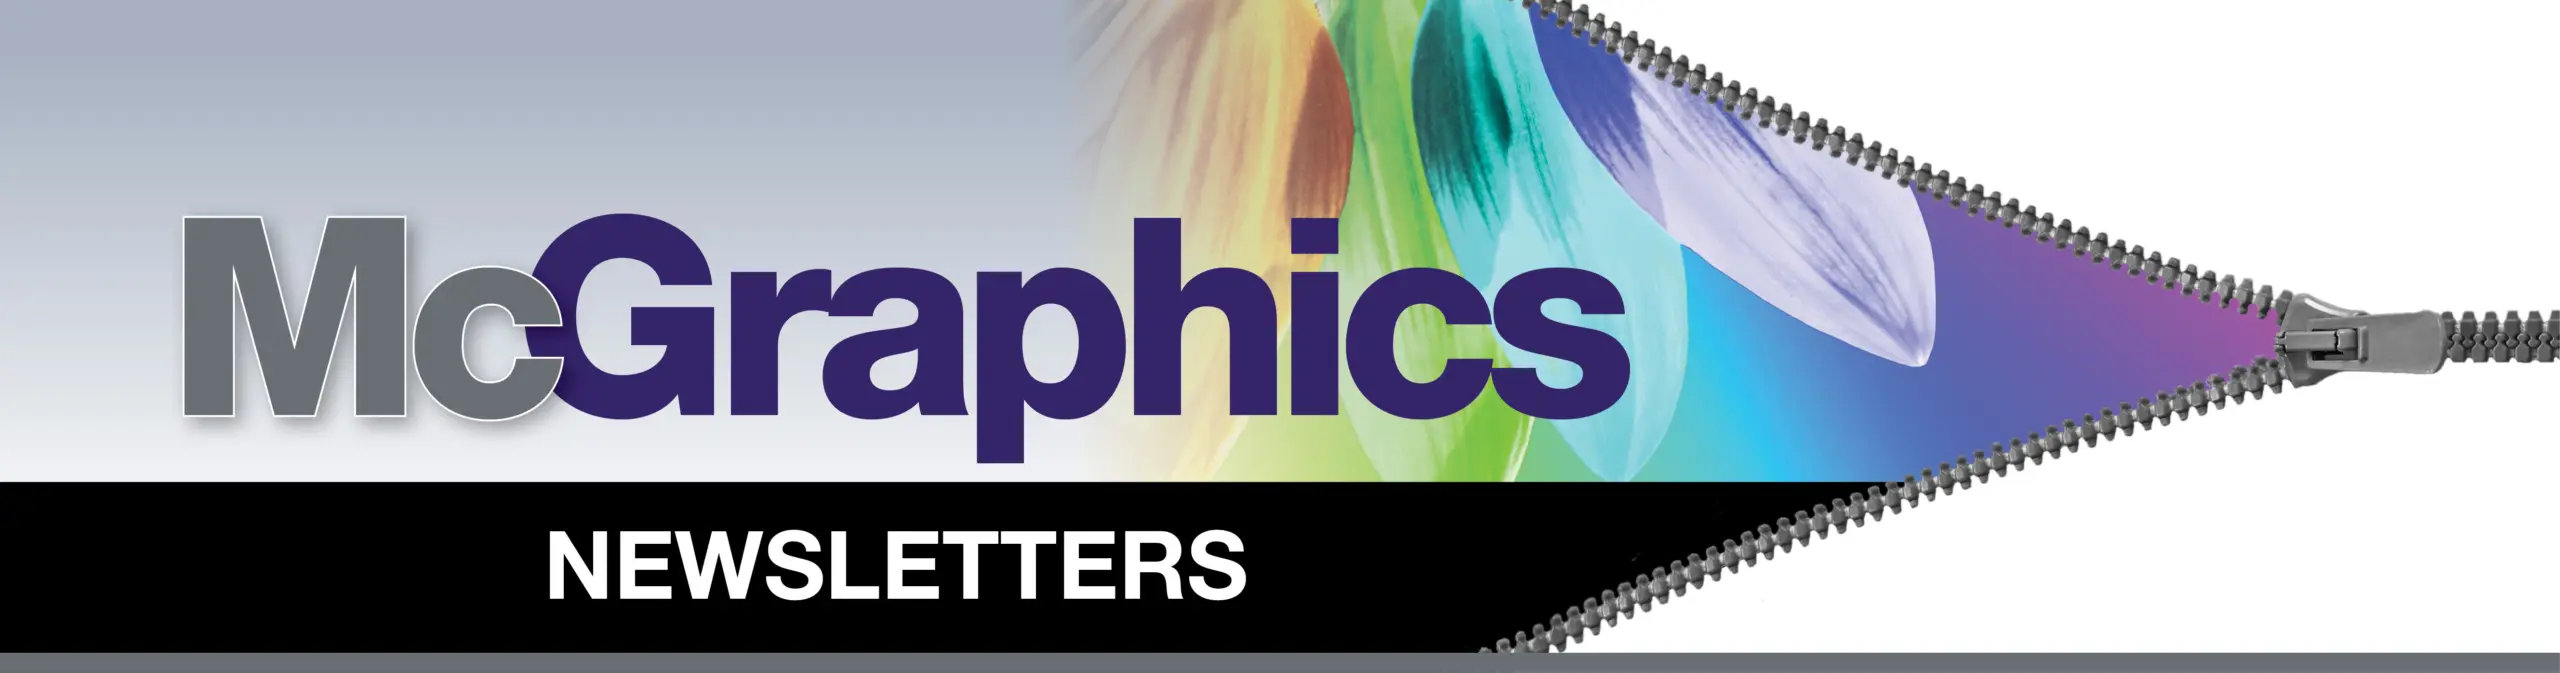 McGraphics Newsletter - Print Marketing